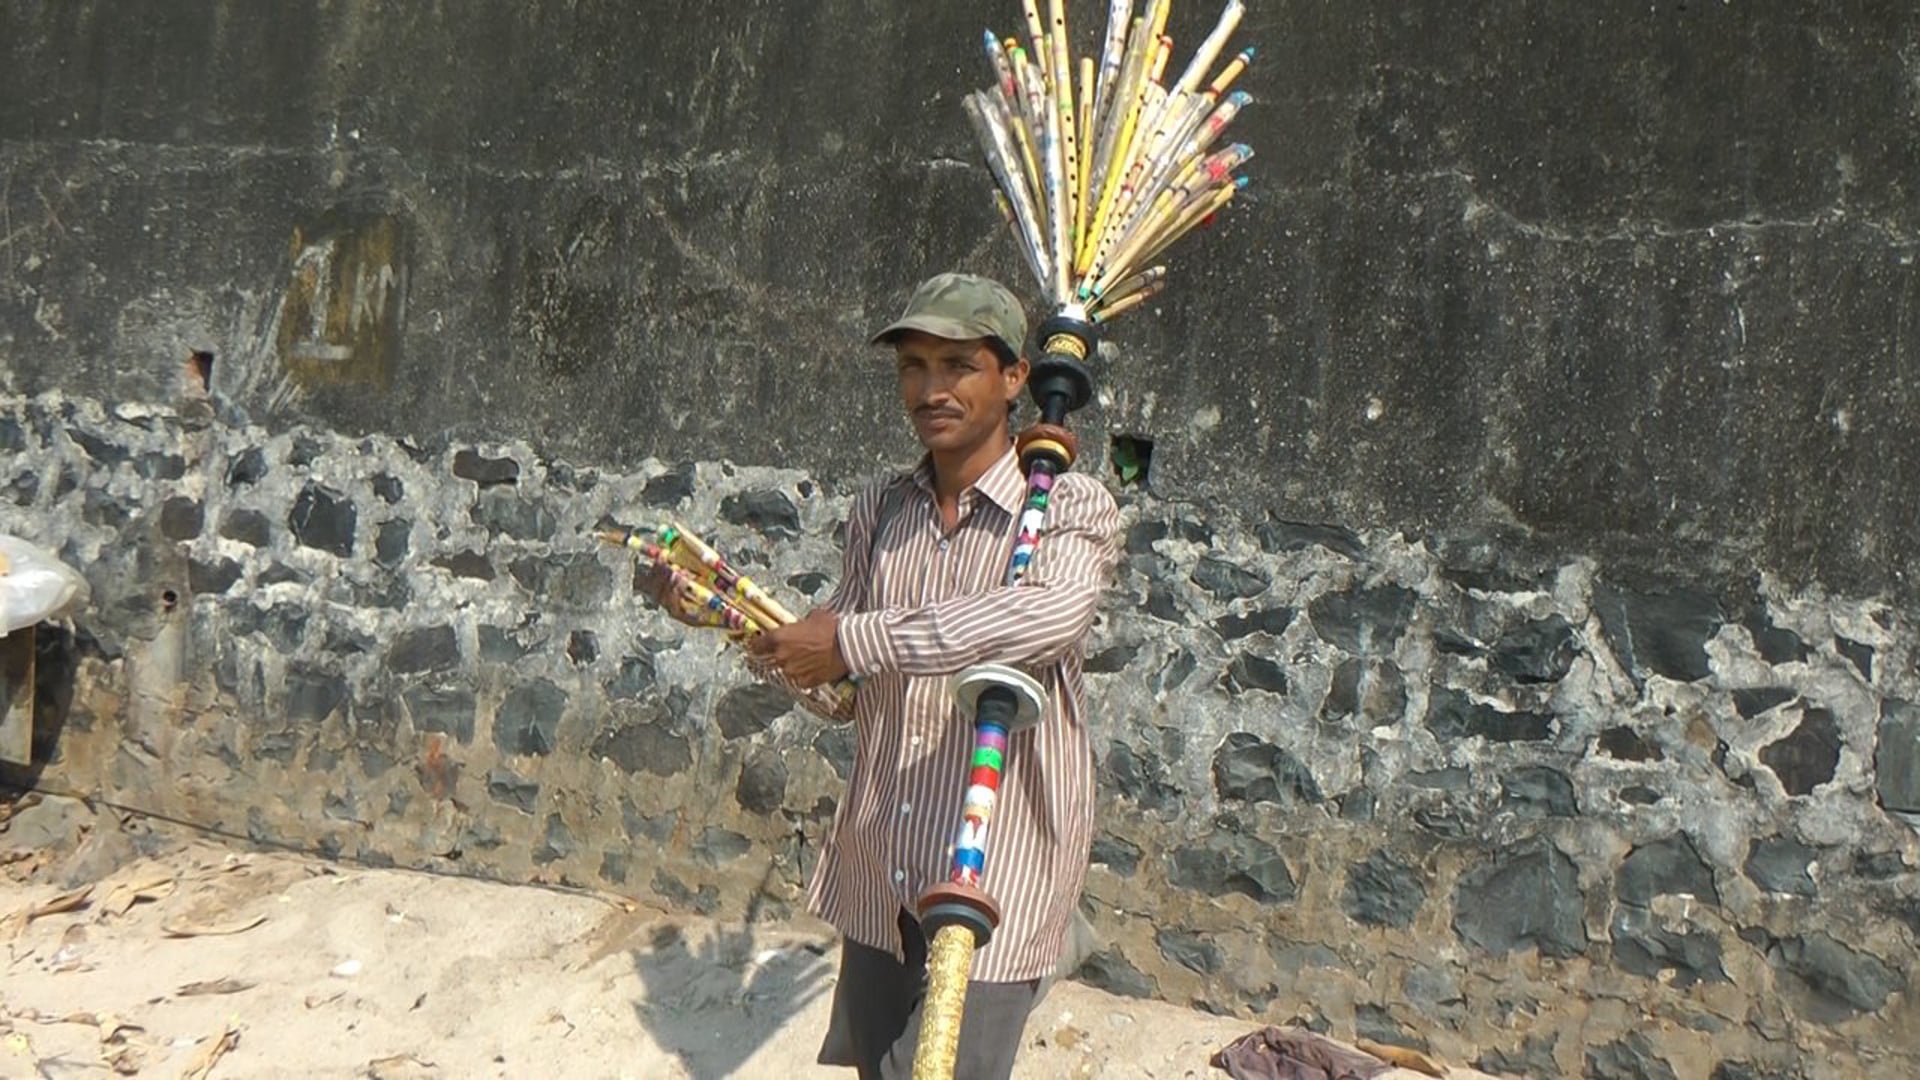 Aas Mohammad, a street flute seller in Mumbai(Bombay).